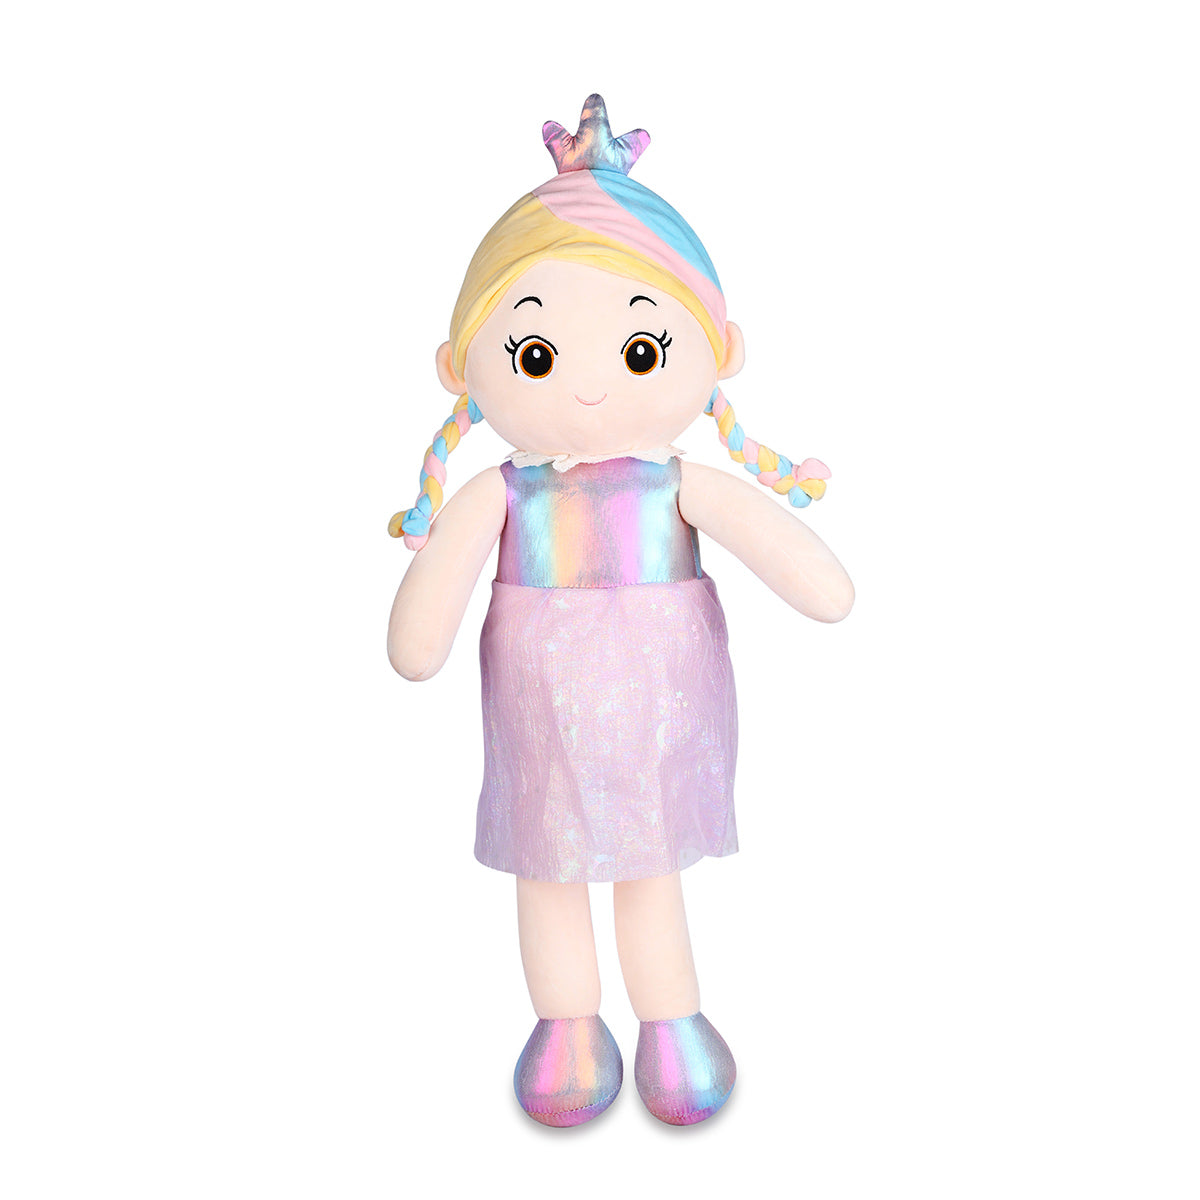 Enchanting Princess Doll Soft Toy